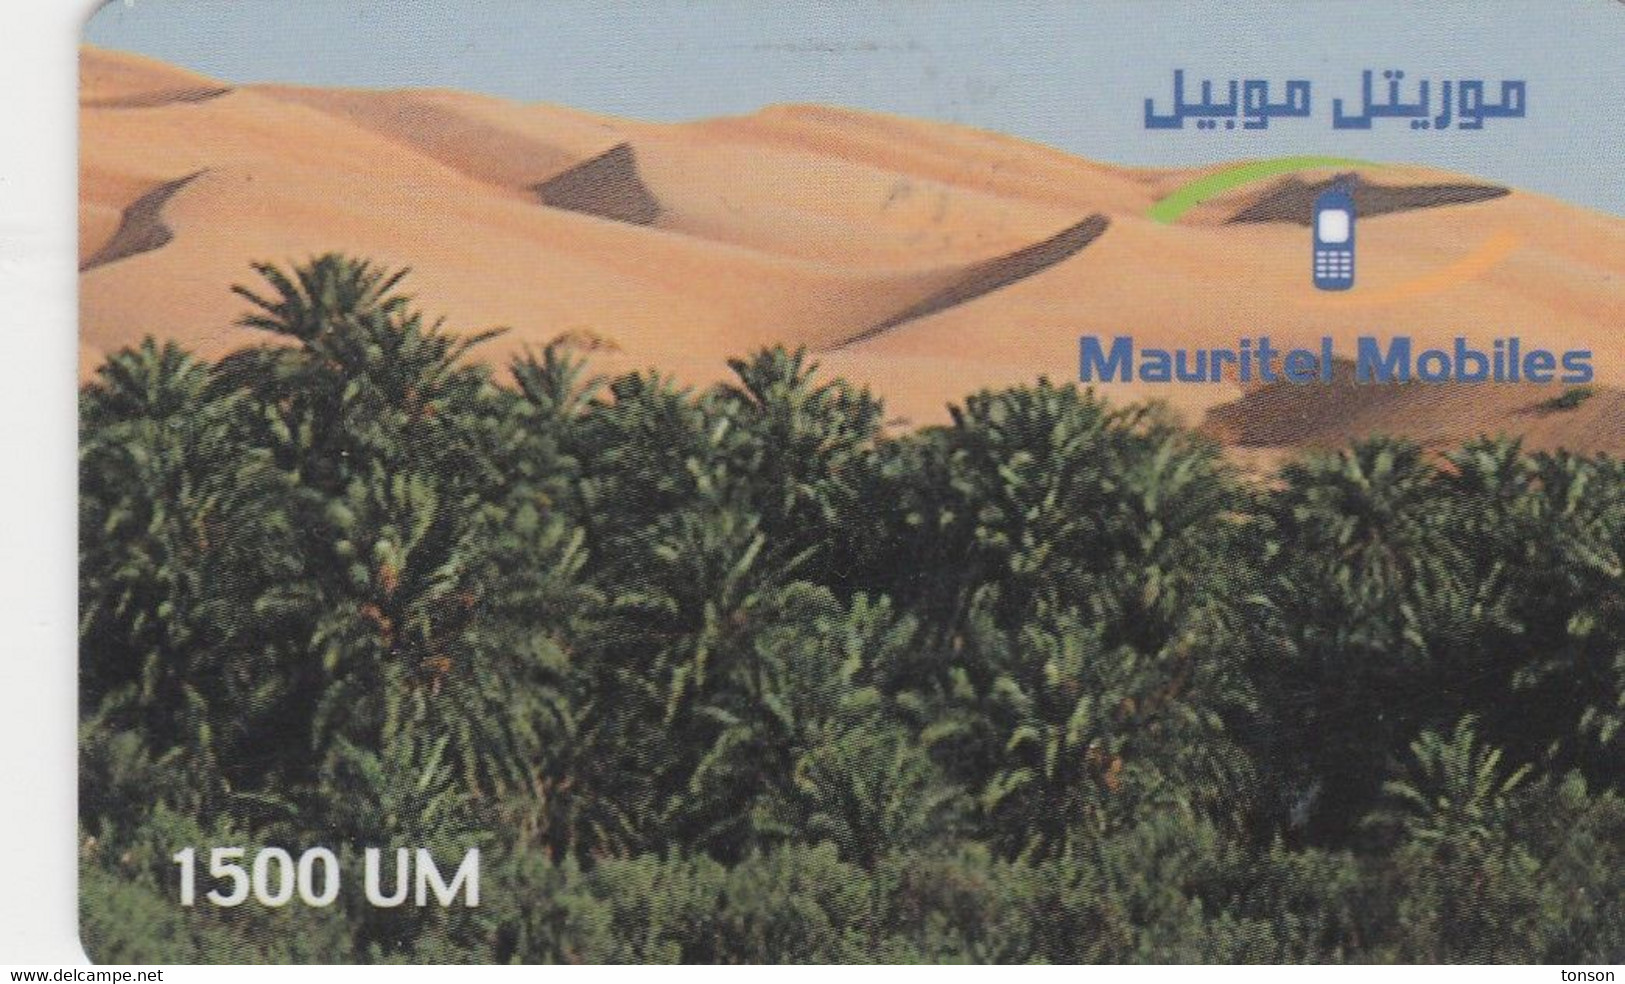 Mauritania, MR-MAU-NAT-0016, 1500 UM,  Désert - 2 (01-12-2001), 2 Scans. - Mauritania